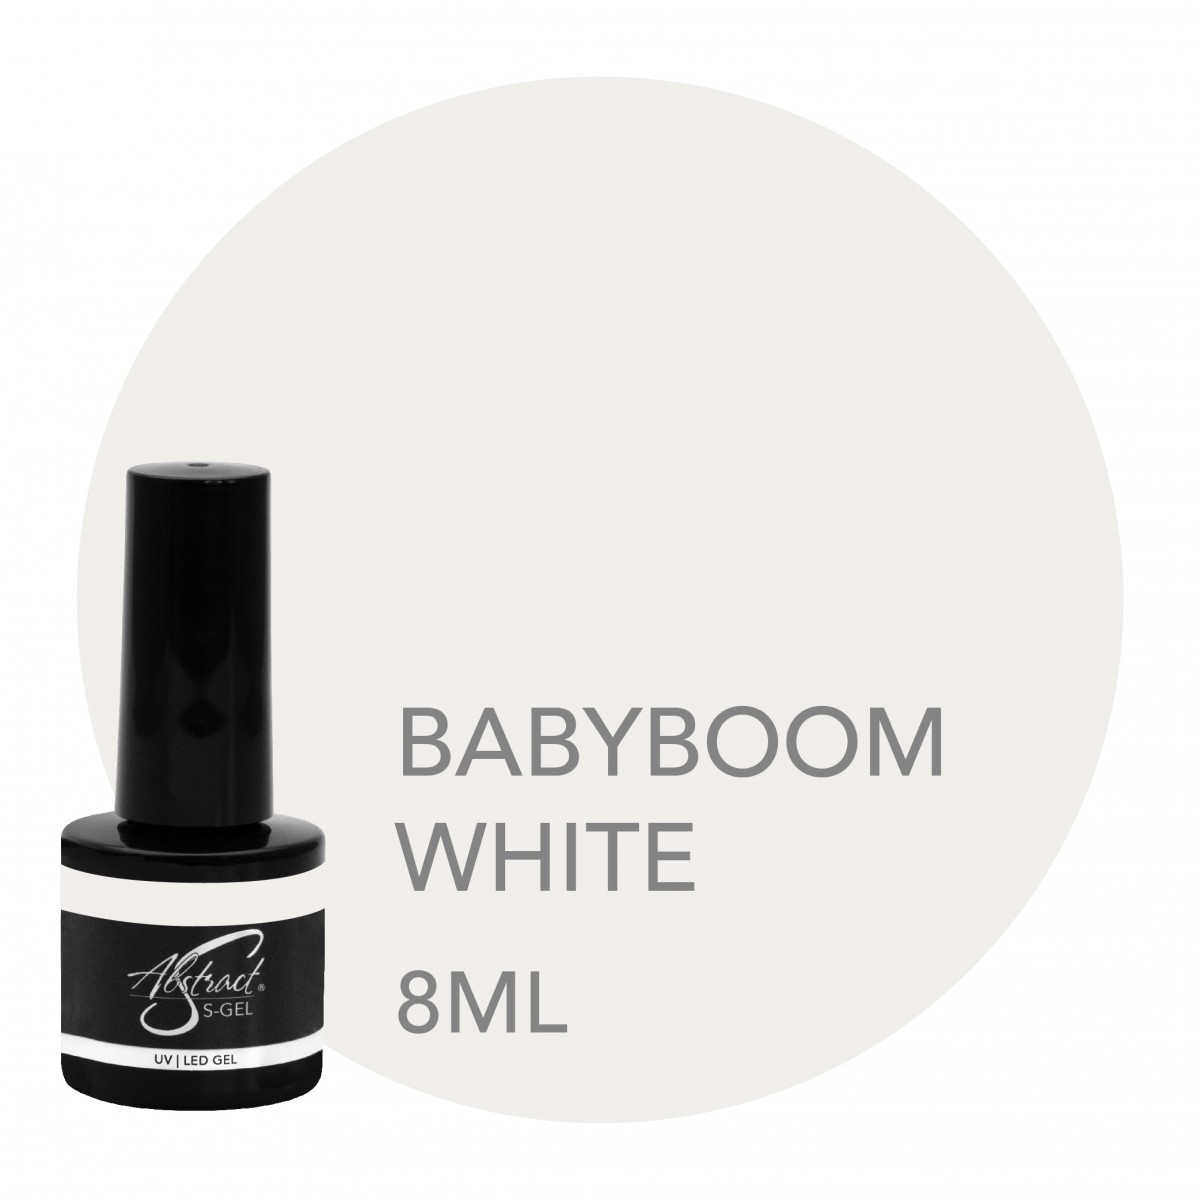 Abstract S-Gel Babyboom White TINY